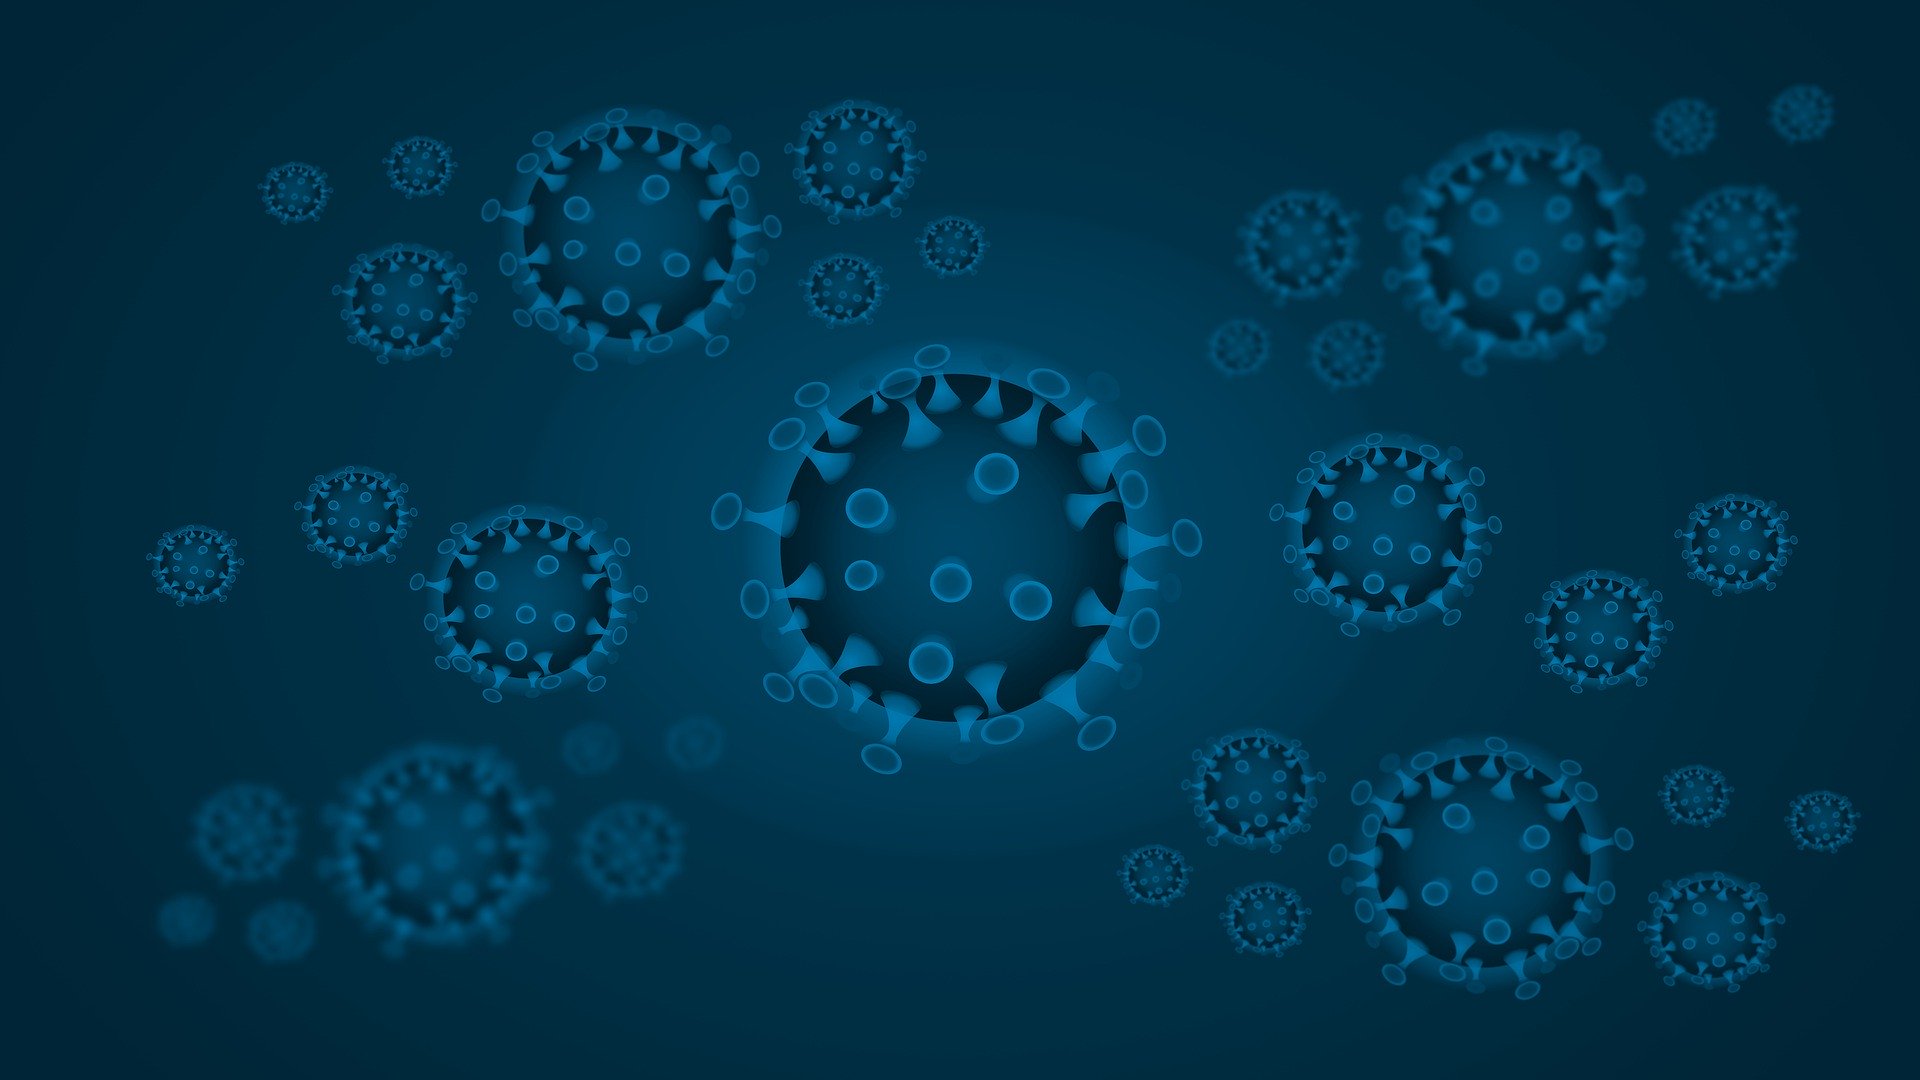 Corona virus image by Vektor Kunst, Pixabay